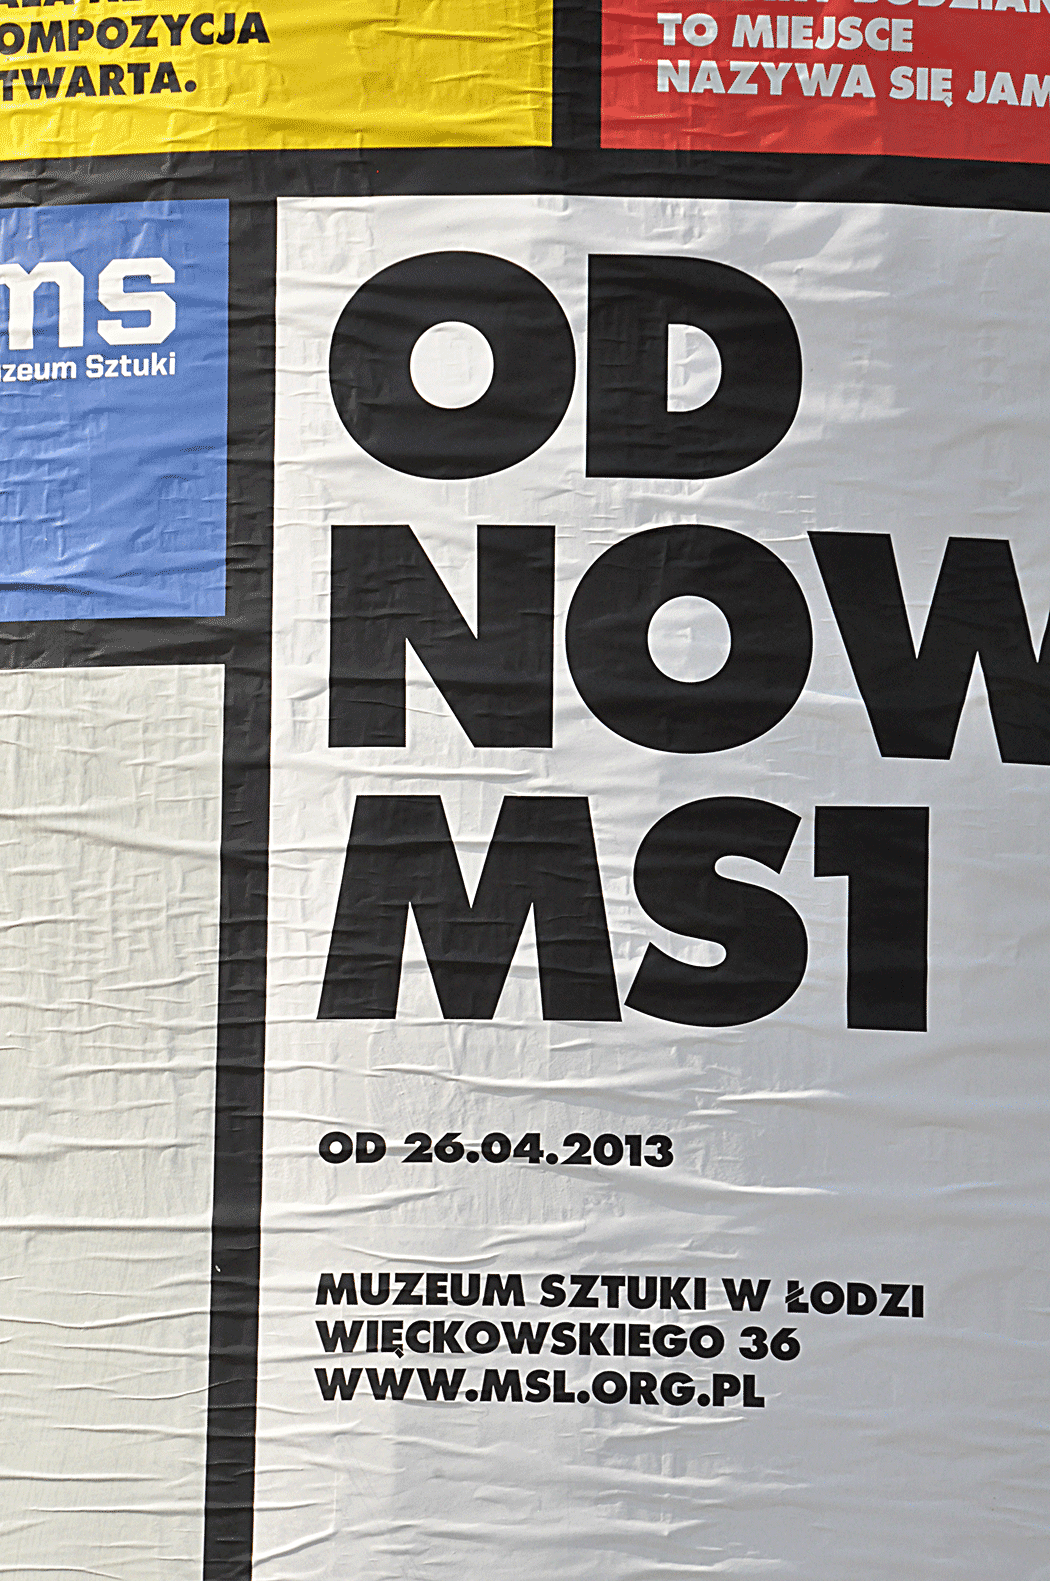 od-nowa-muzeum-sztuki-lodz-hakobo-jakub-stepien-plakat-poster-id-exhibition0011